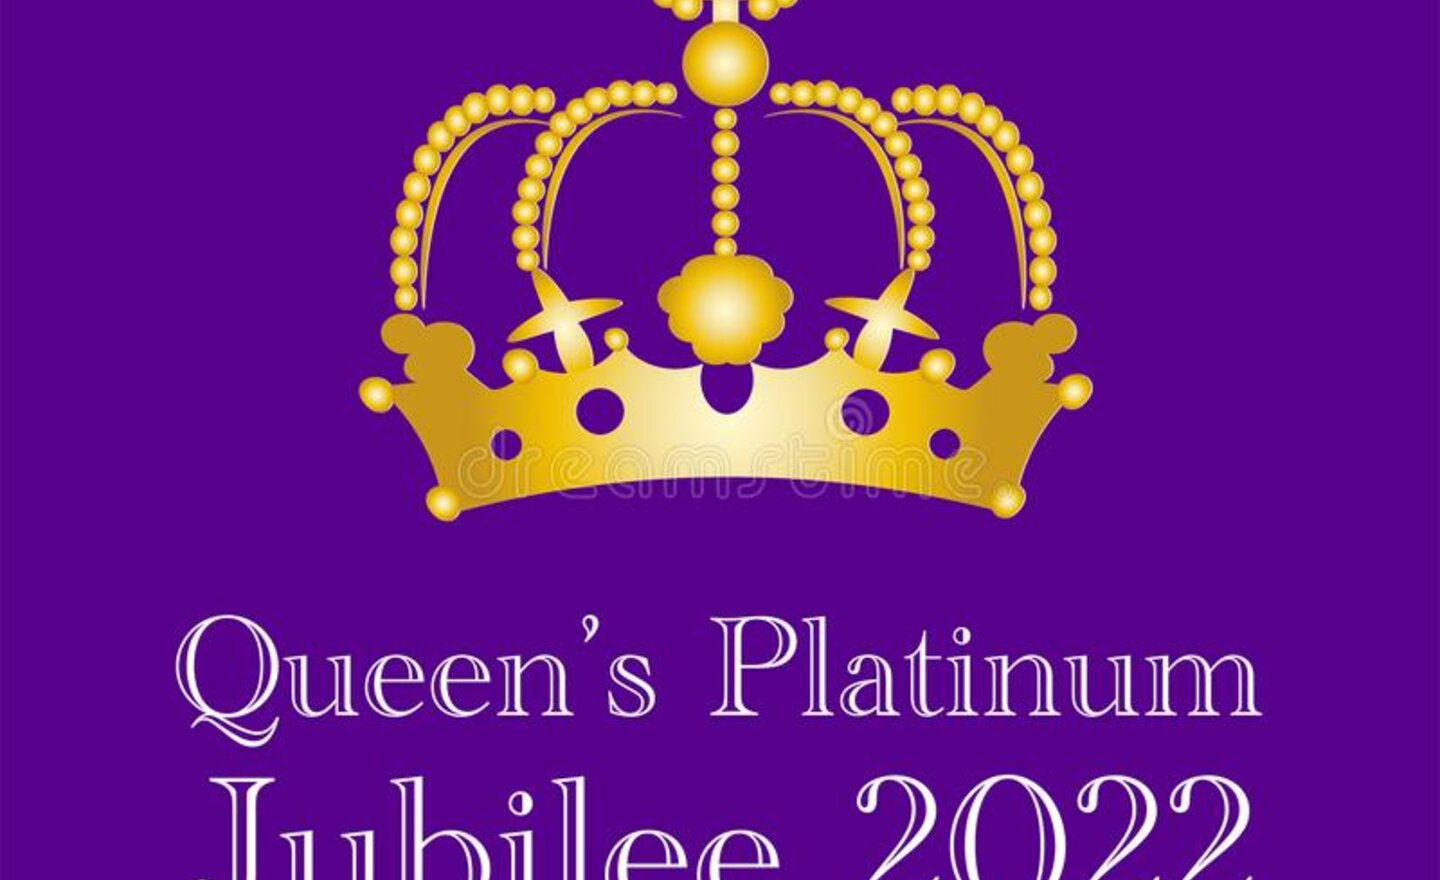 Image of Platinum Jubilee 2022